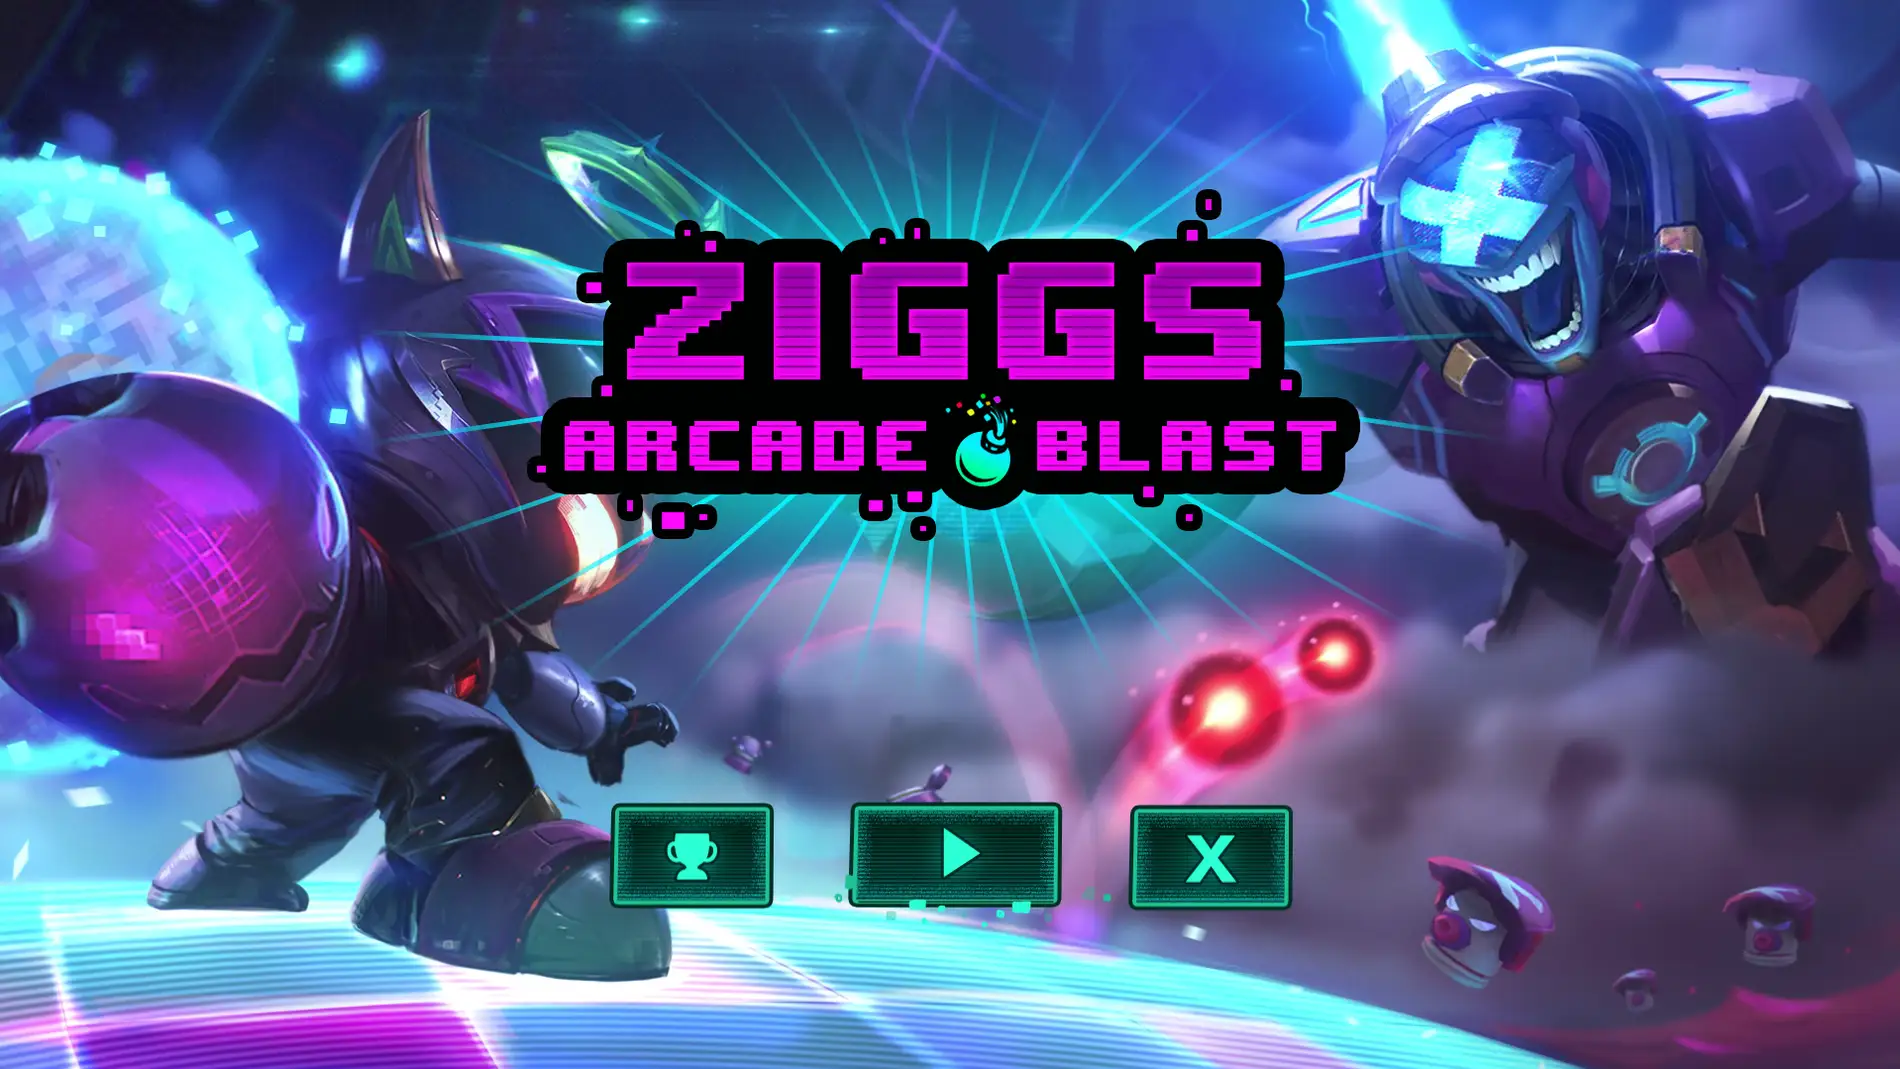 Ziggs Arcade